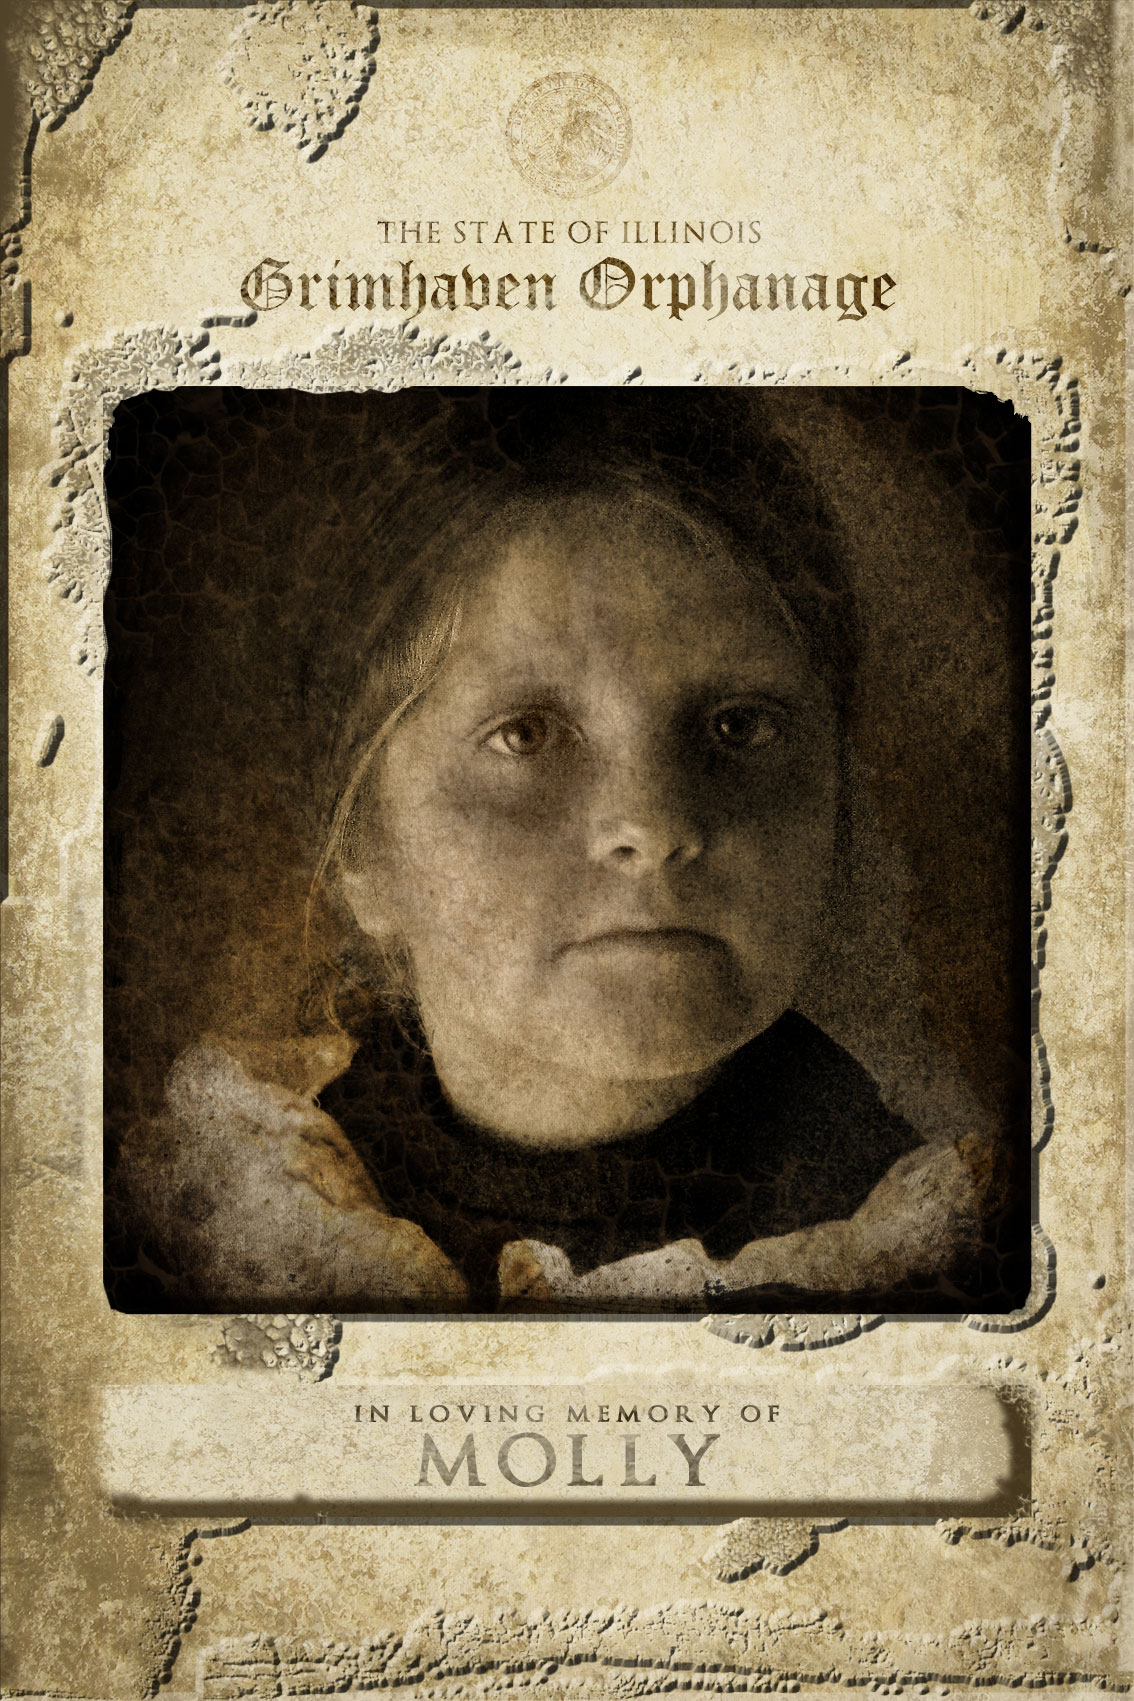 Huntsman: The Orphanage (Halloween Edition) screenshot